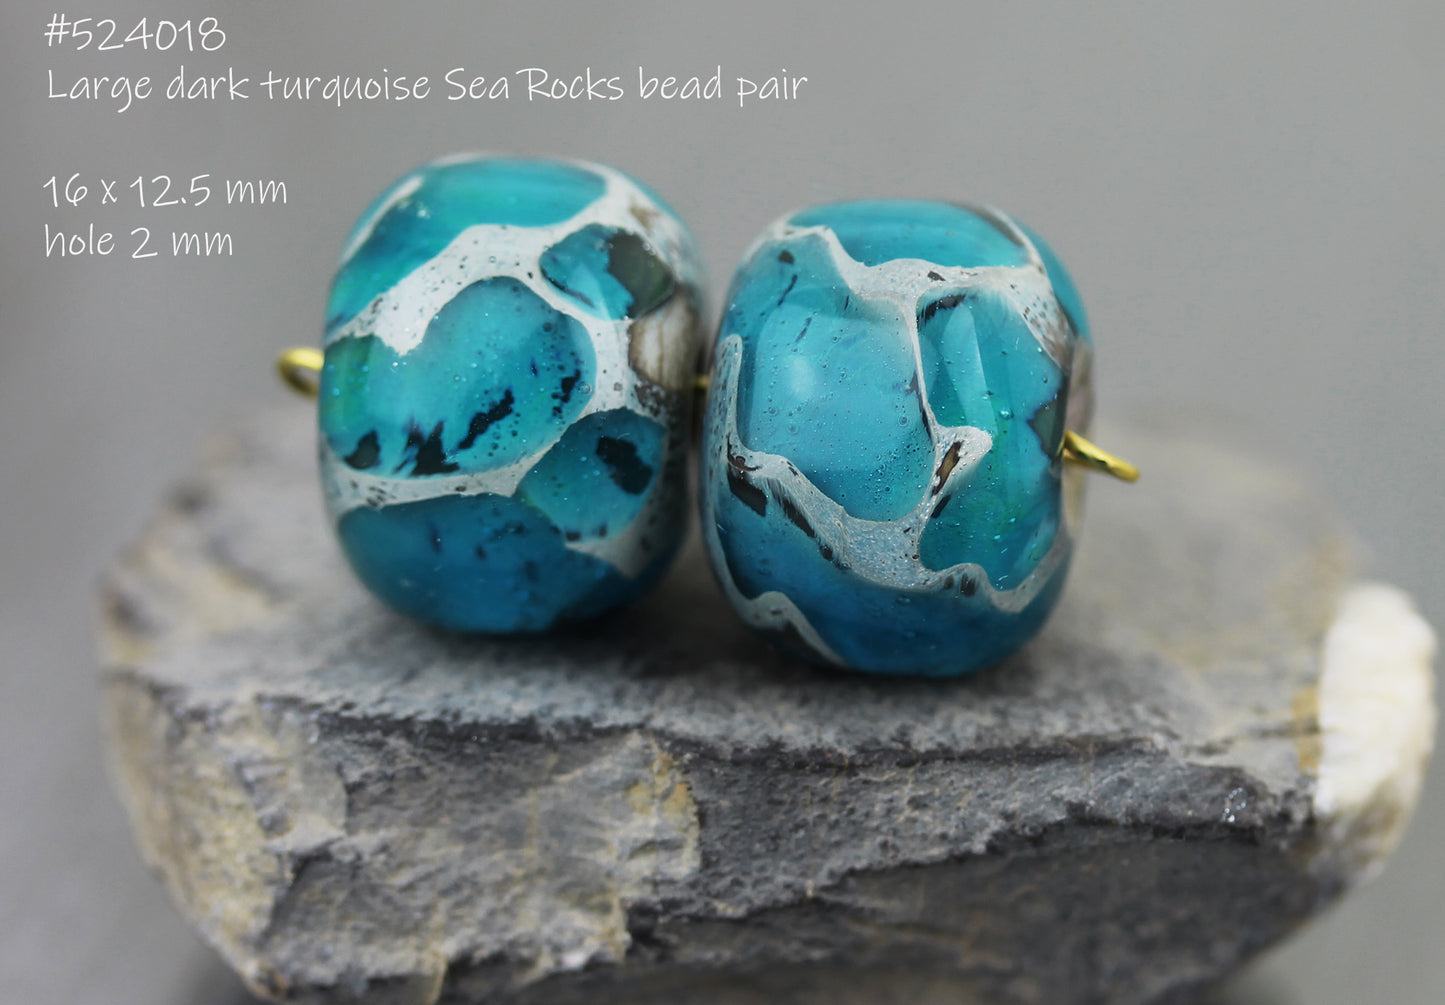 Pair of dark turquoise Sea Rocks beads #524018-2